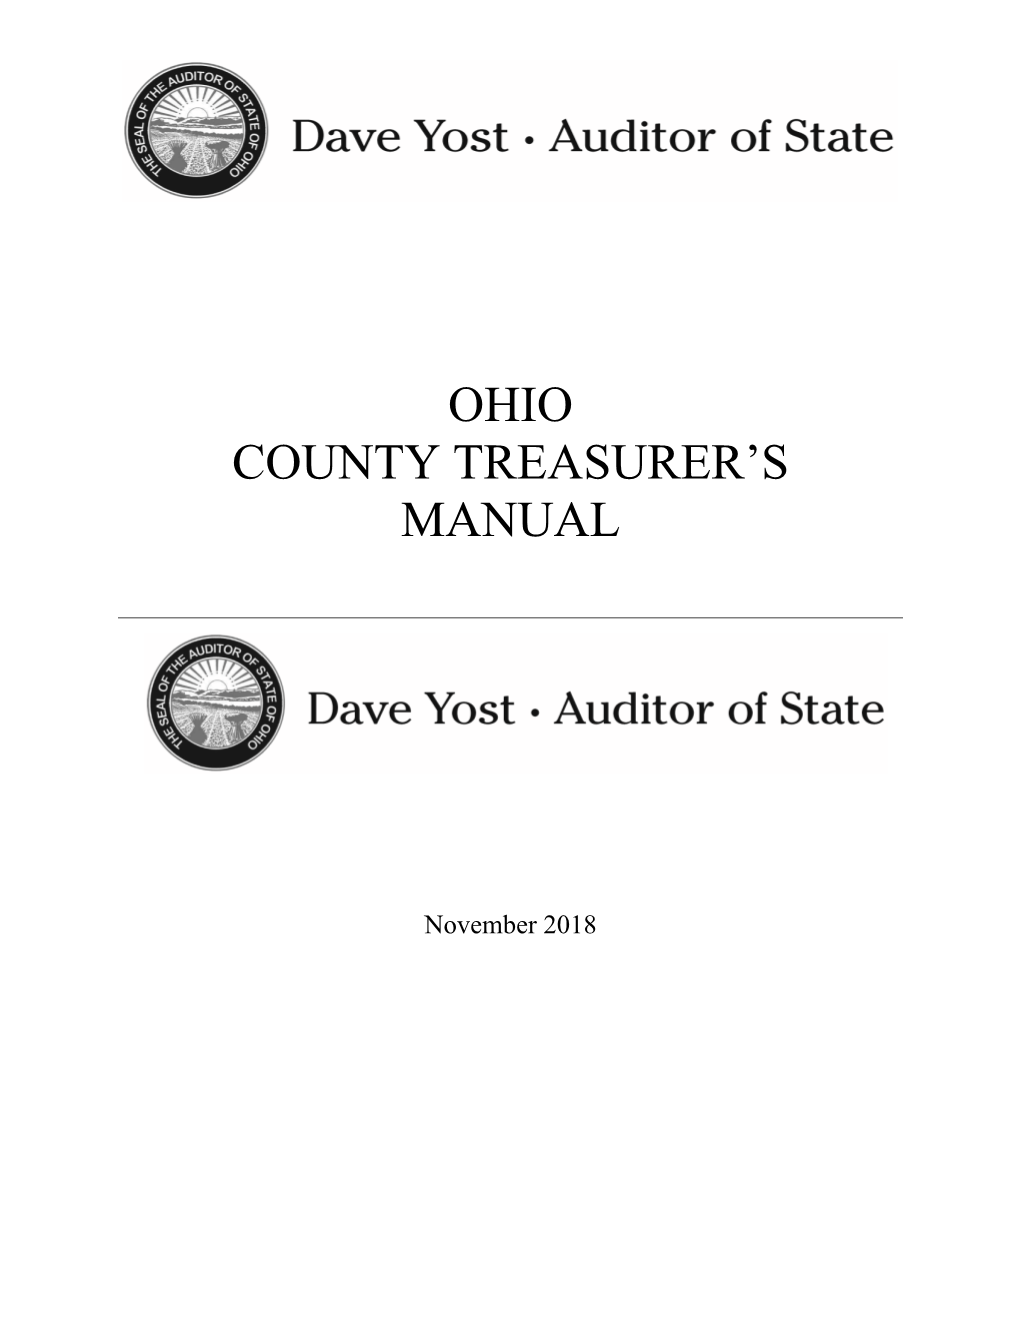 Ohio County Treasurer's Manual 2018